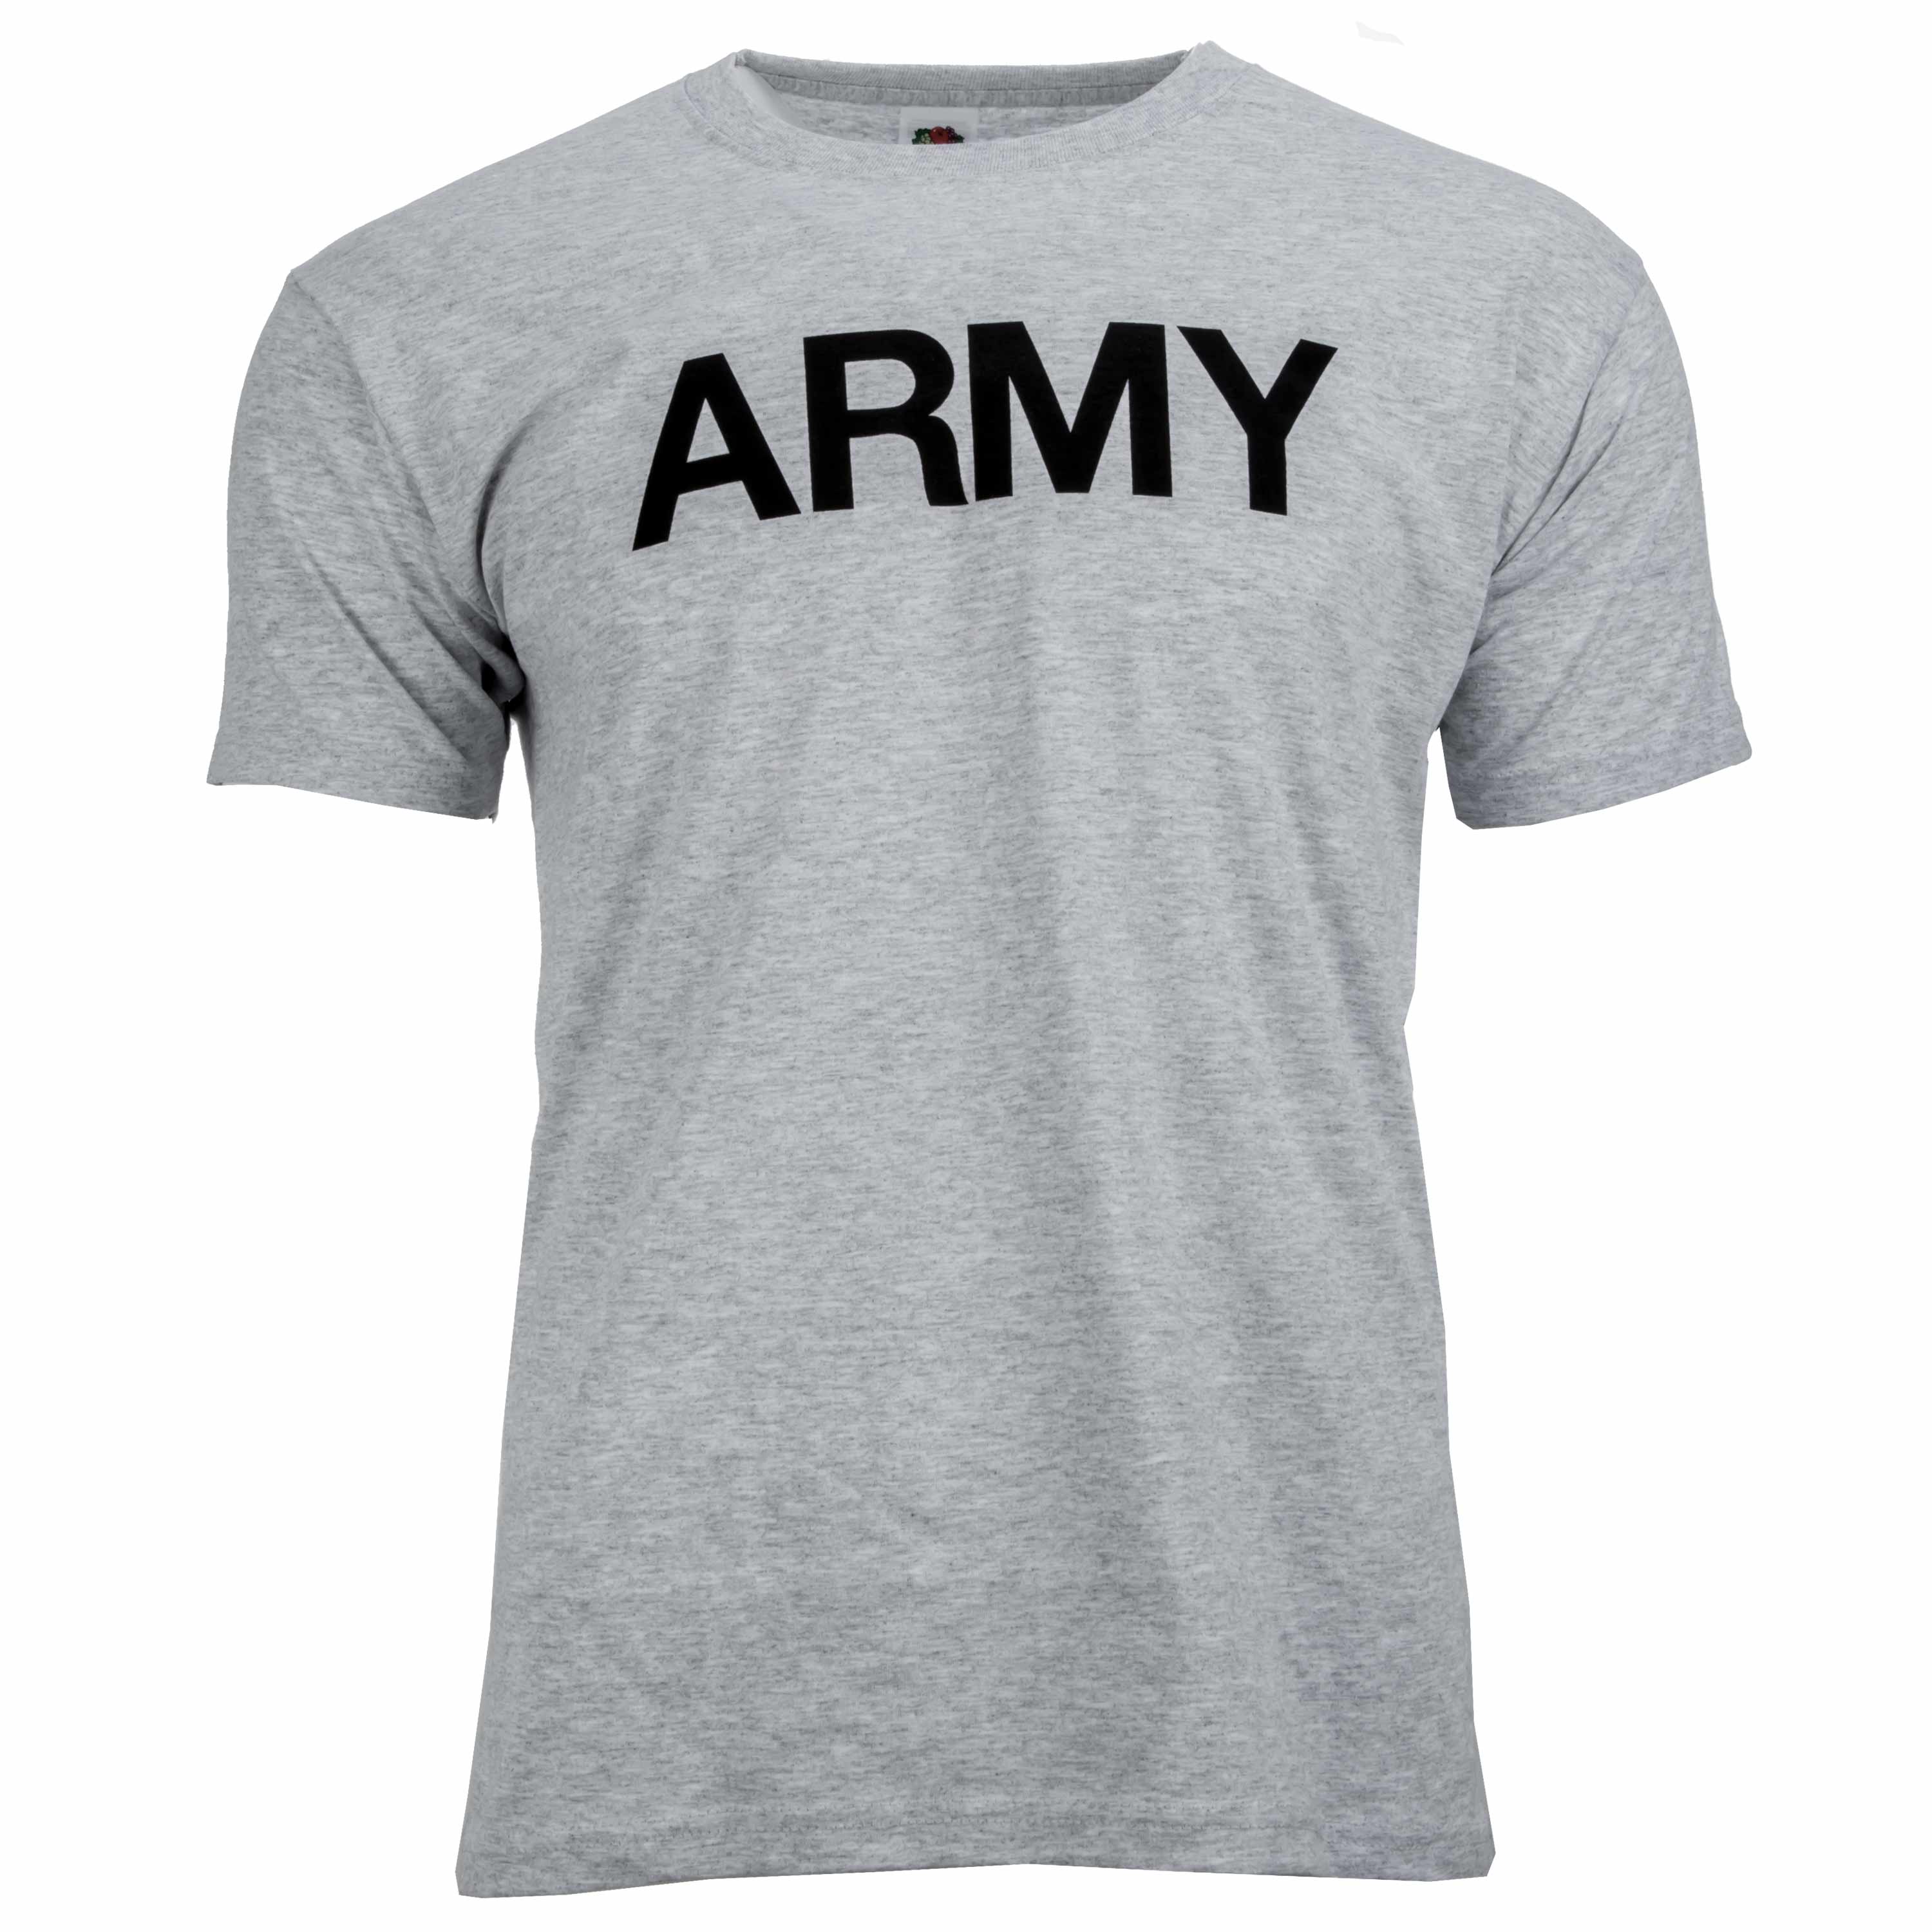 T-Shirt Army Big A gray | T-Shirt Army Big A gray | Shirts | Shirts ...